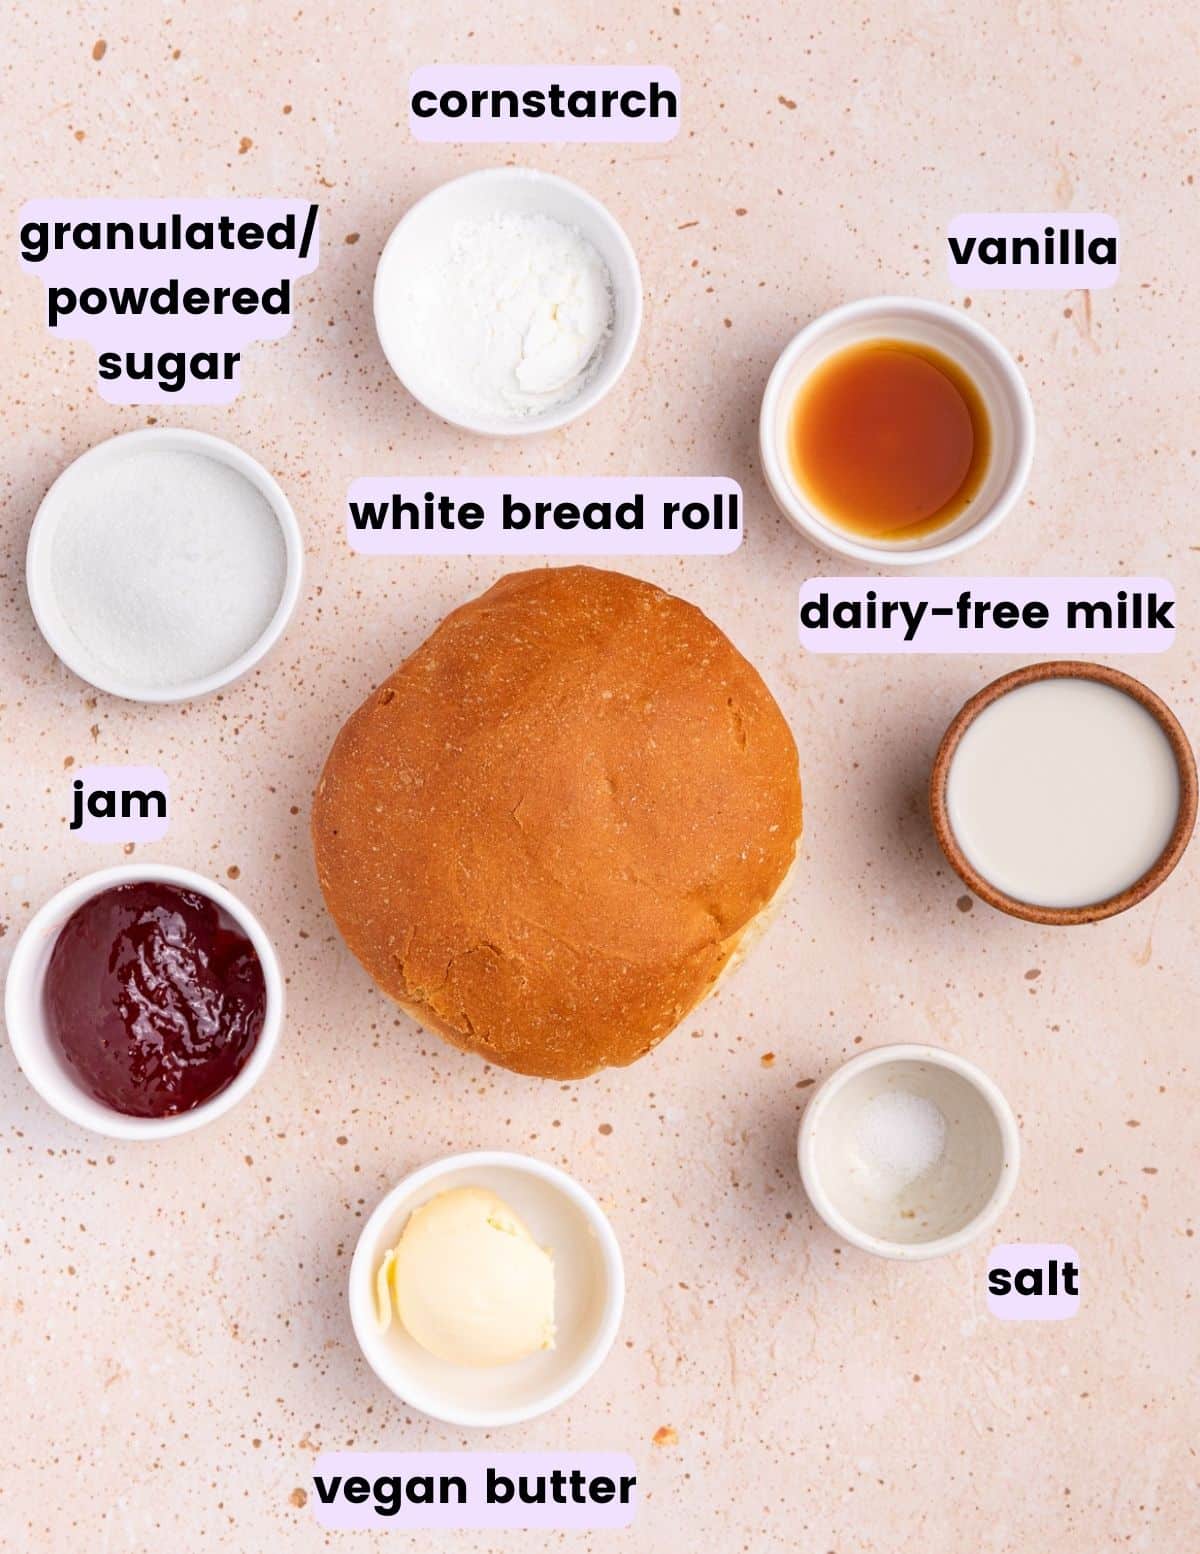 sugar, cornstarch, vanilla, bread roll, jam, dairy-free milk, salt, and vegan butter